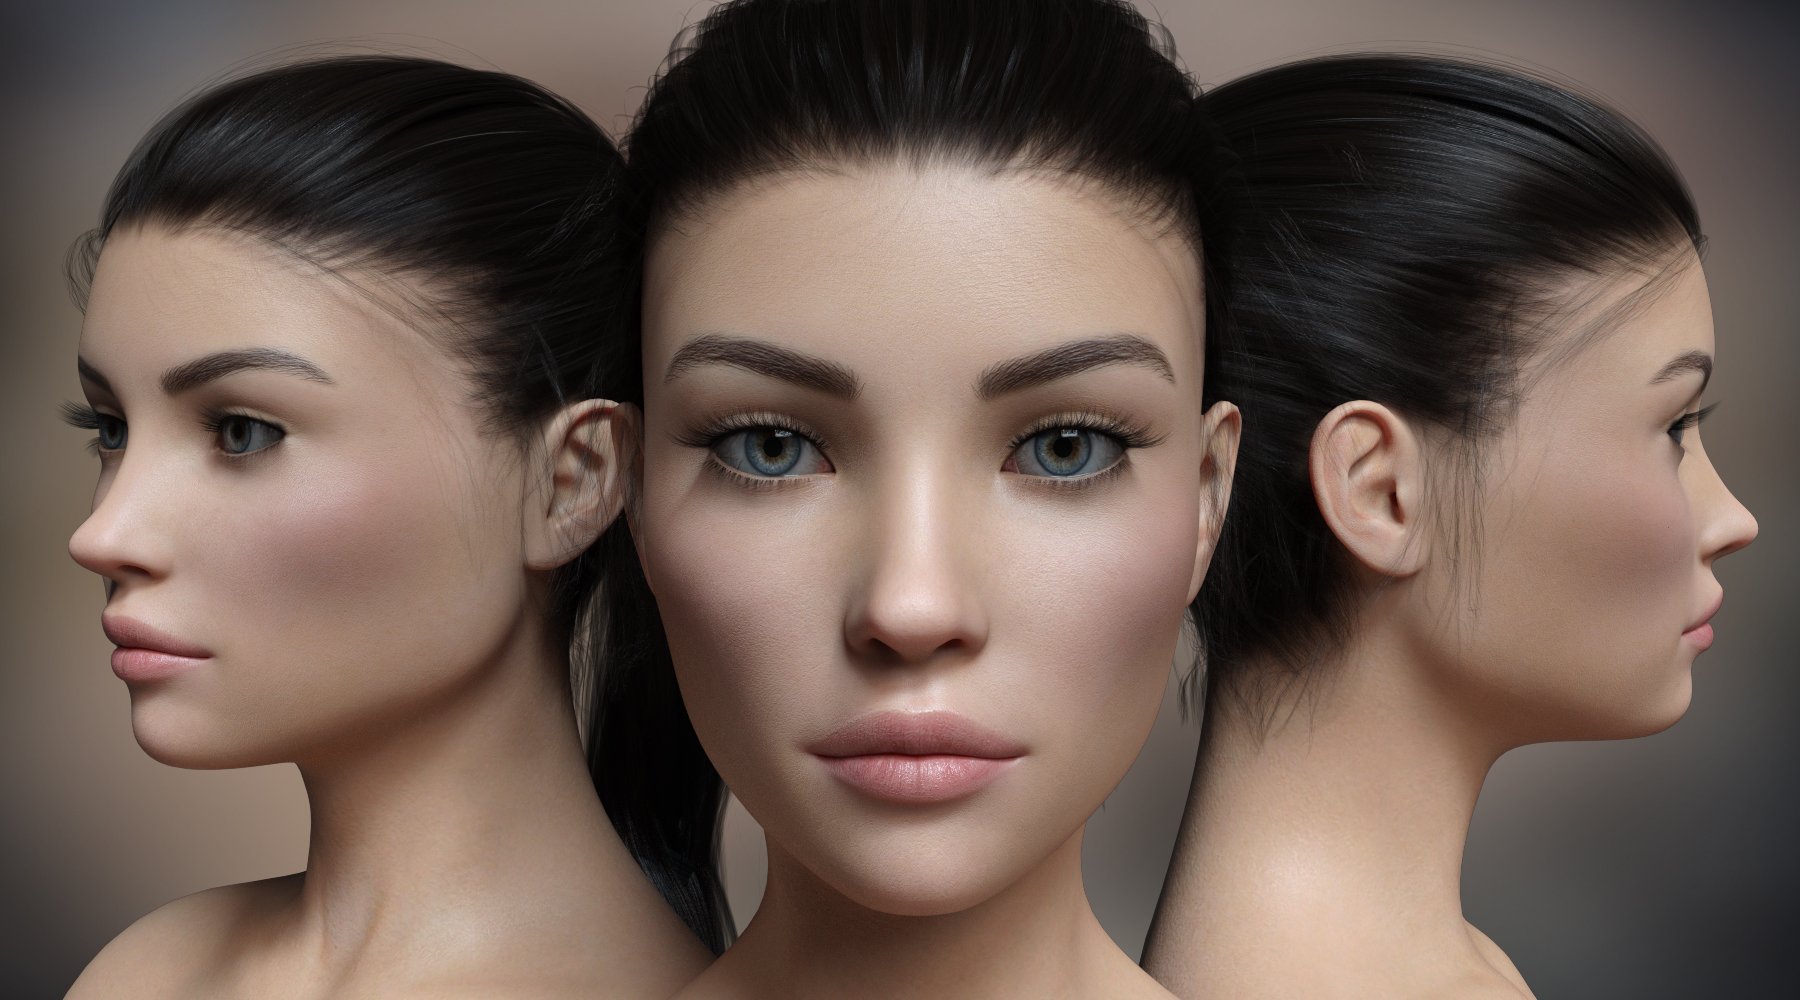 P3D Yvette for Genesis 8 Female by: P3Design, 3D Models by Daz 3D